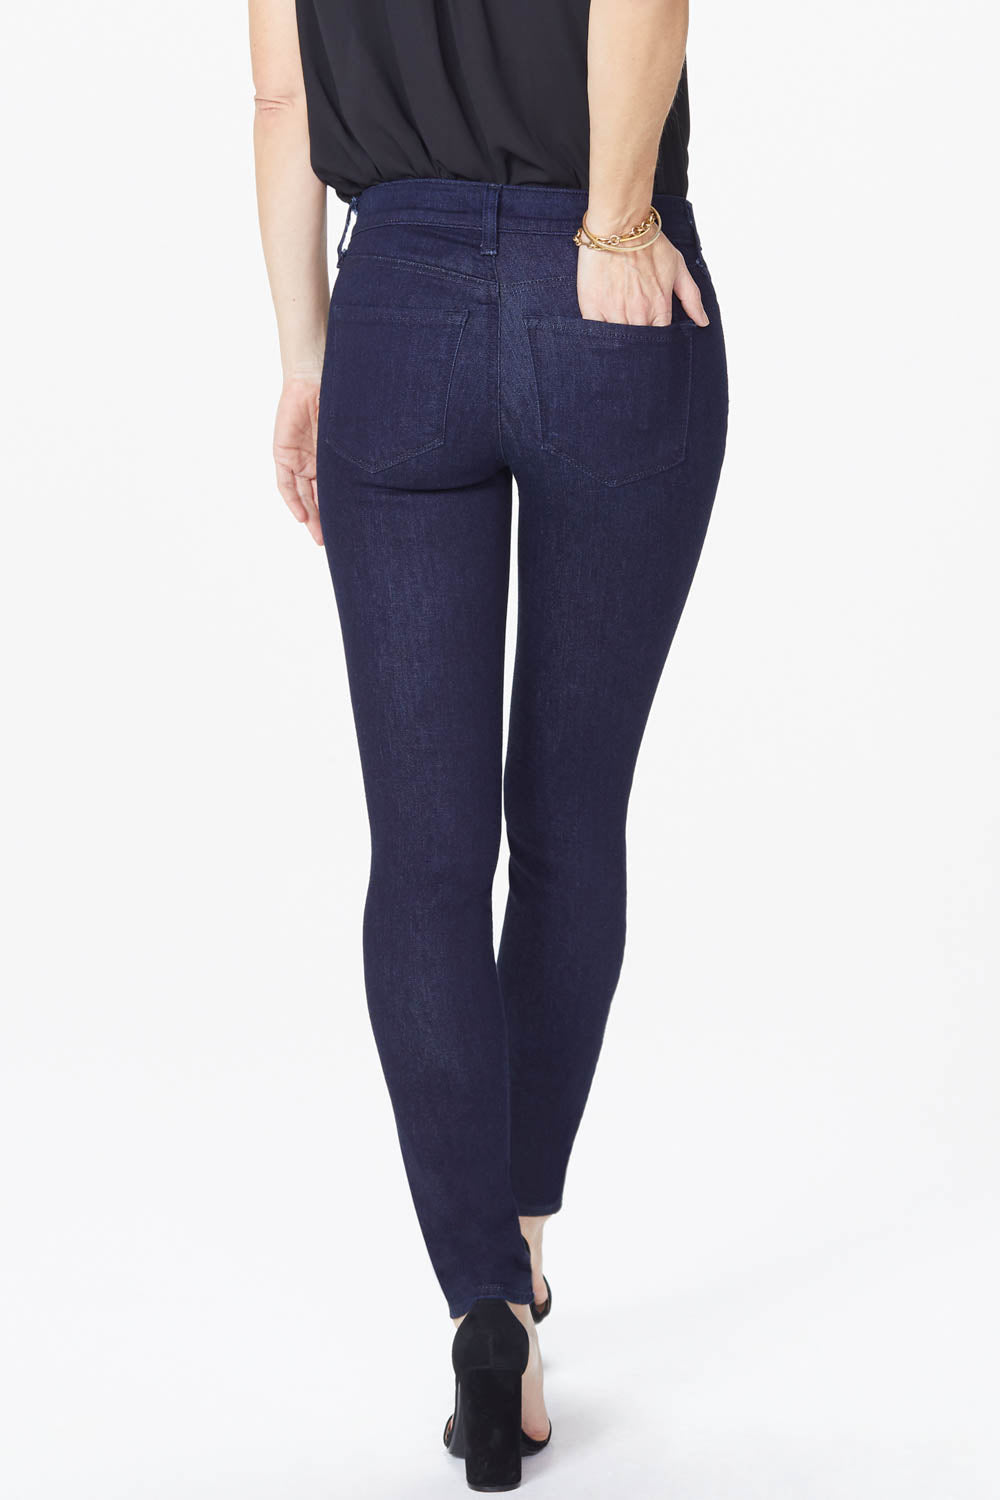 Ami Skinny Jeans In Petite - Rinse Blue | NYDJ